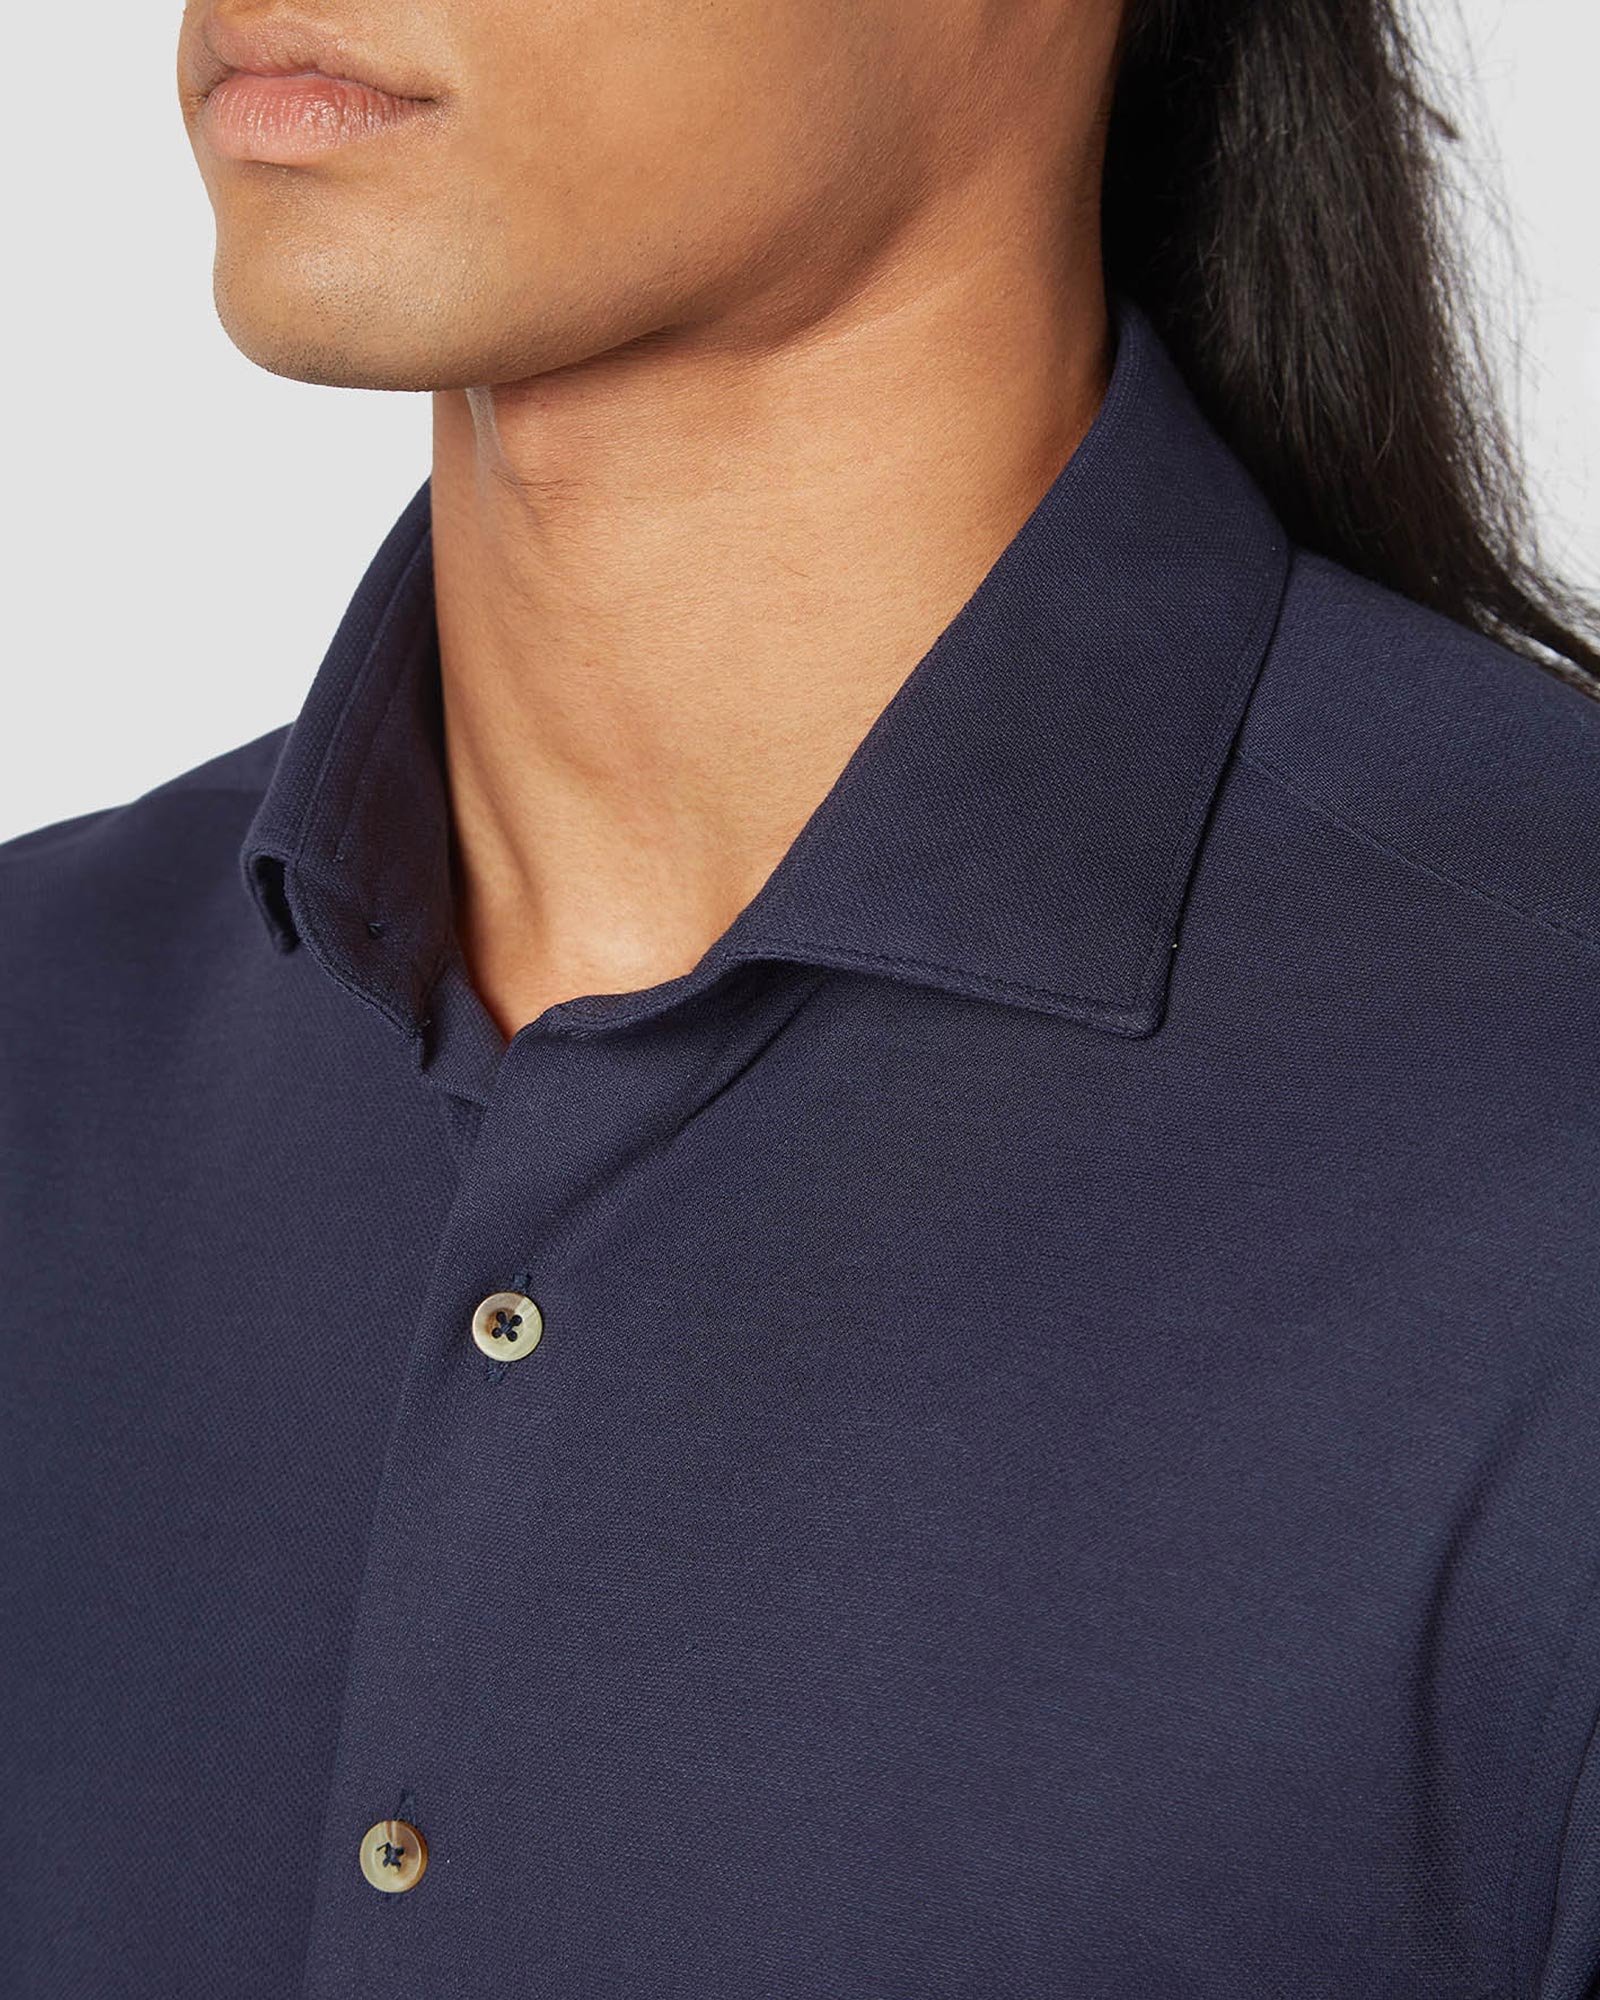 Bombay Shirt Company - Dark Sapphire Knit Shirt